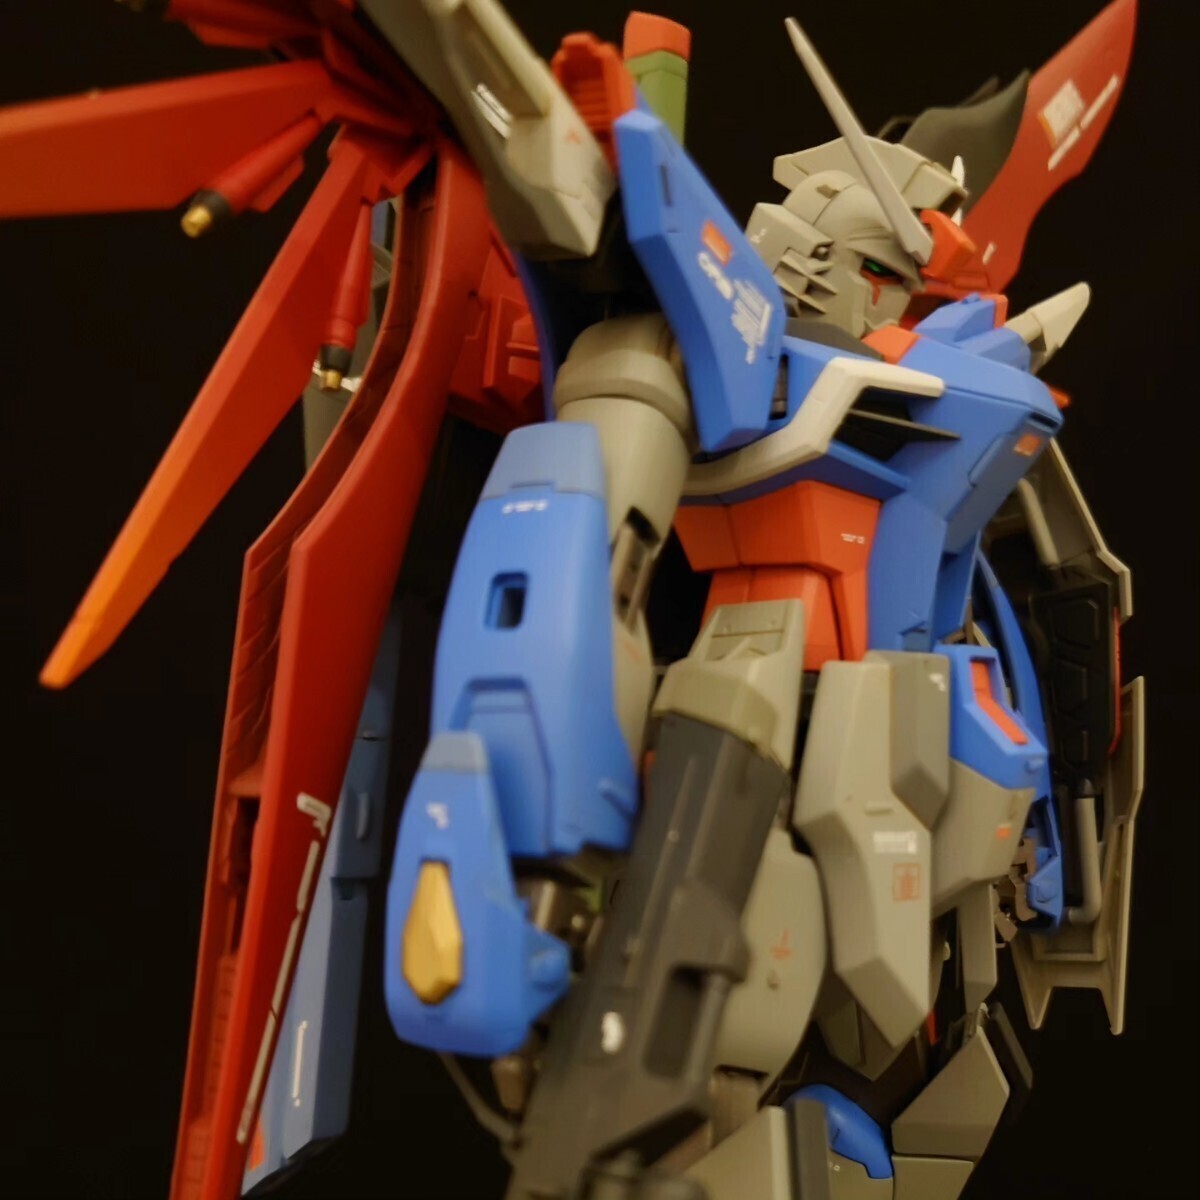 MG 1/100 Destiny Gundam ( Extreme blast режим )SPECⅡ цвет [ Mobile Suit Gundam SEED FREEDOM].. покрашен конечный продукт 